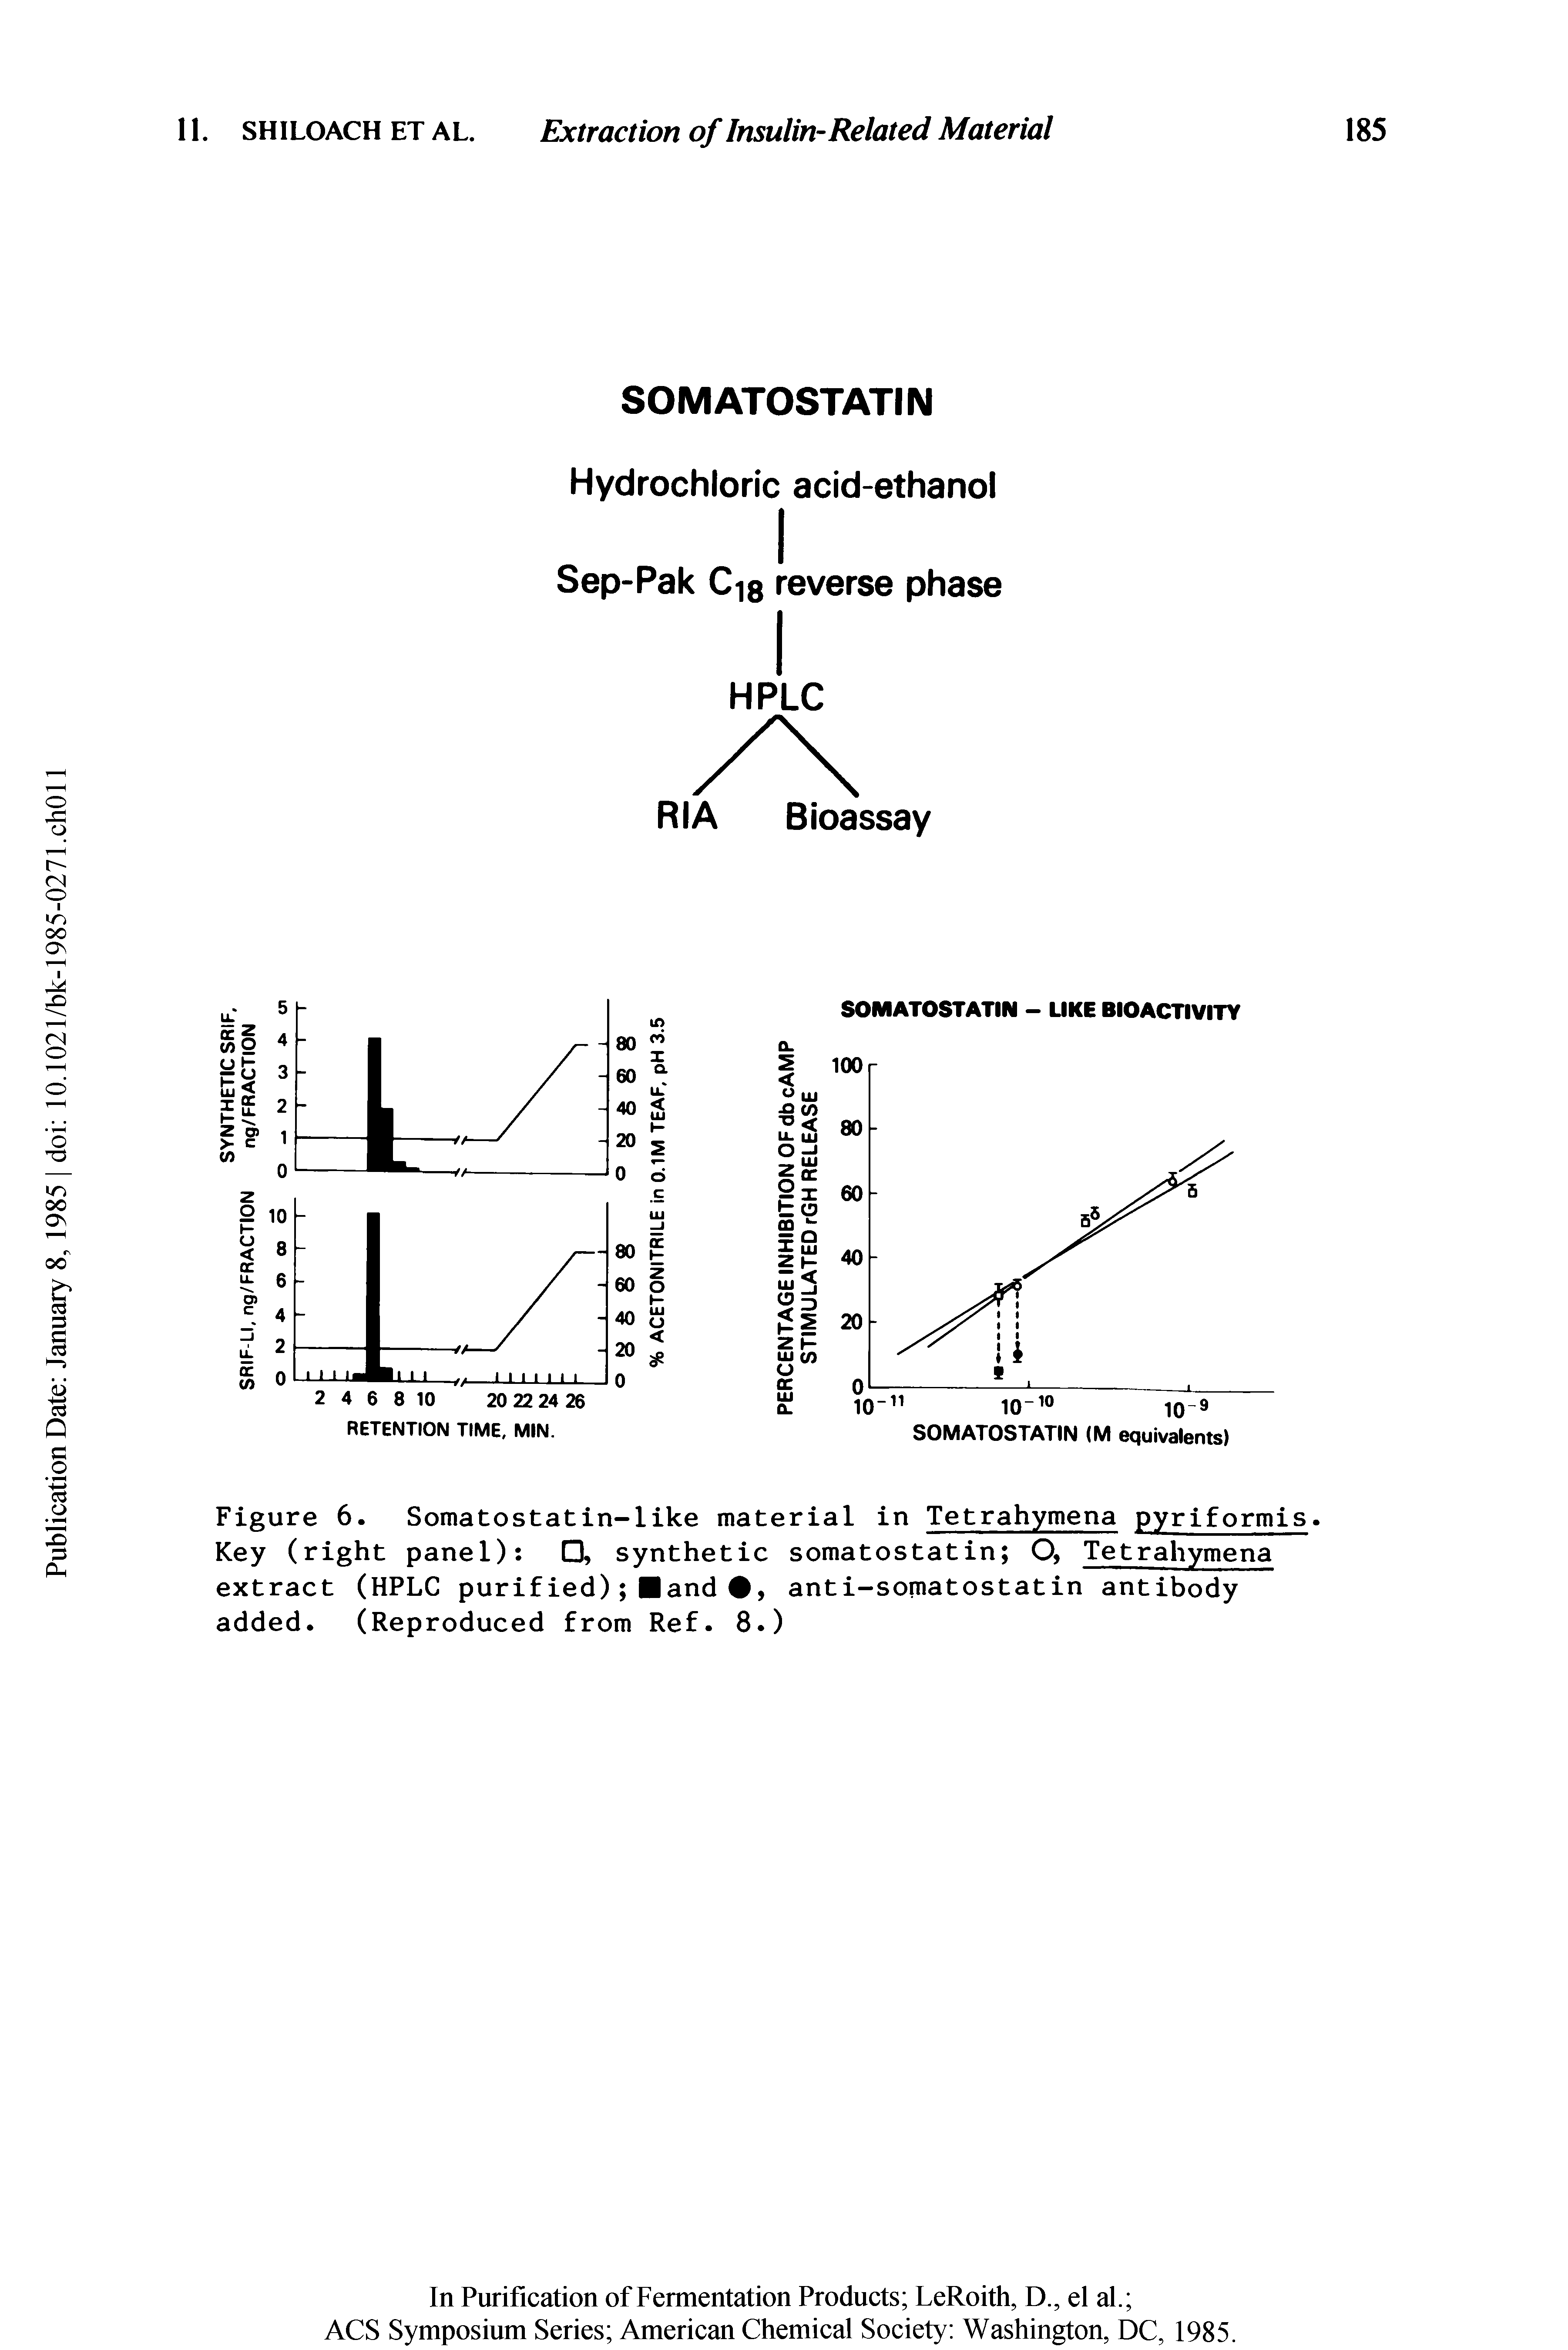 Figure 6. Somatostatin-like material in Tetrahymena pyriformis. Key (right panel) , synthetic somatostatin O, Tetrahymena extract (HPLC purified) Band , anti-somatostatin antibody added. (Reproduced from Ref. 8.)...